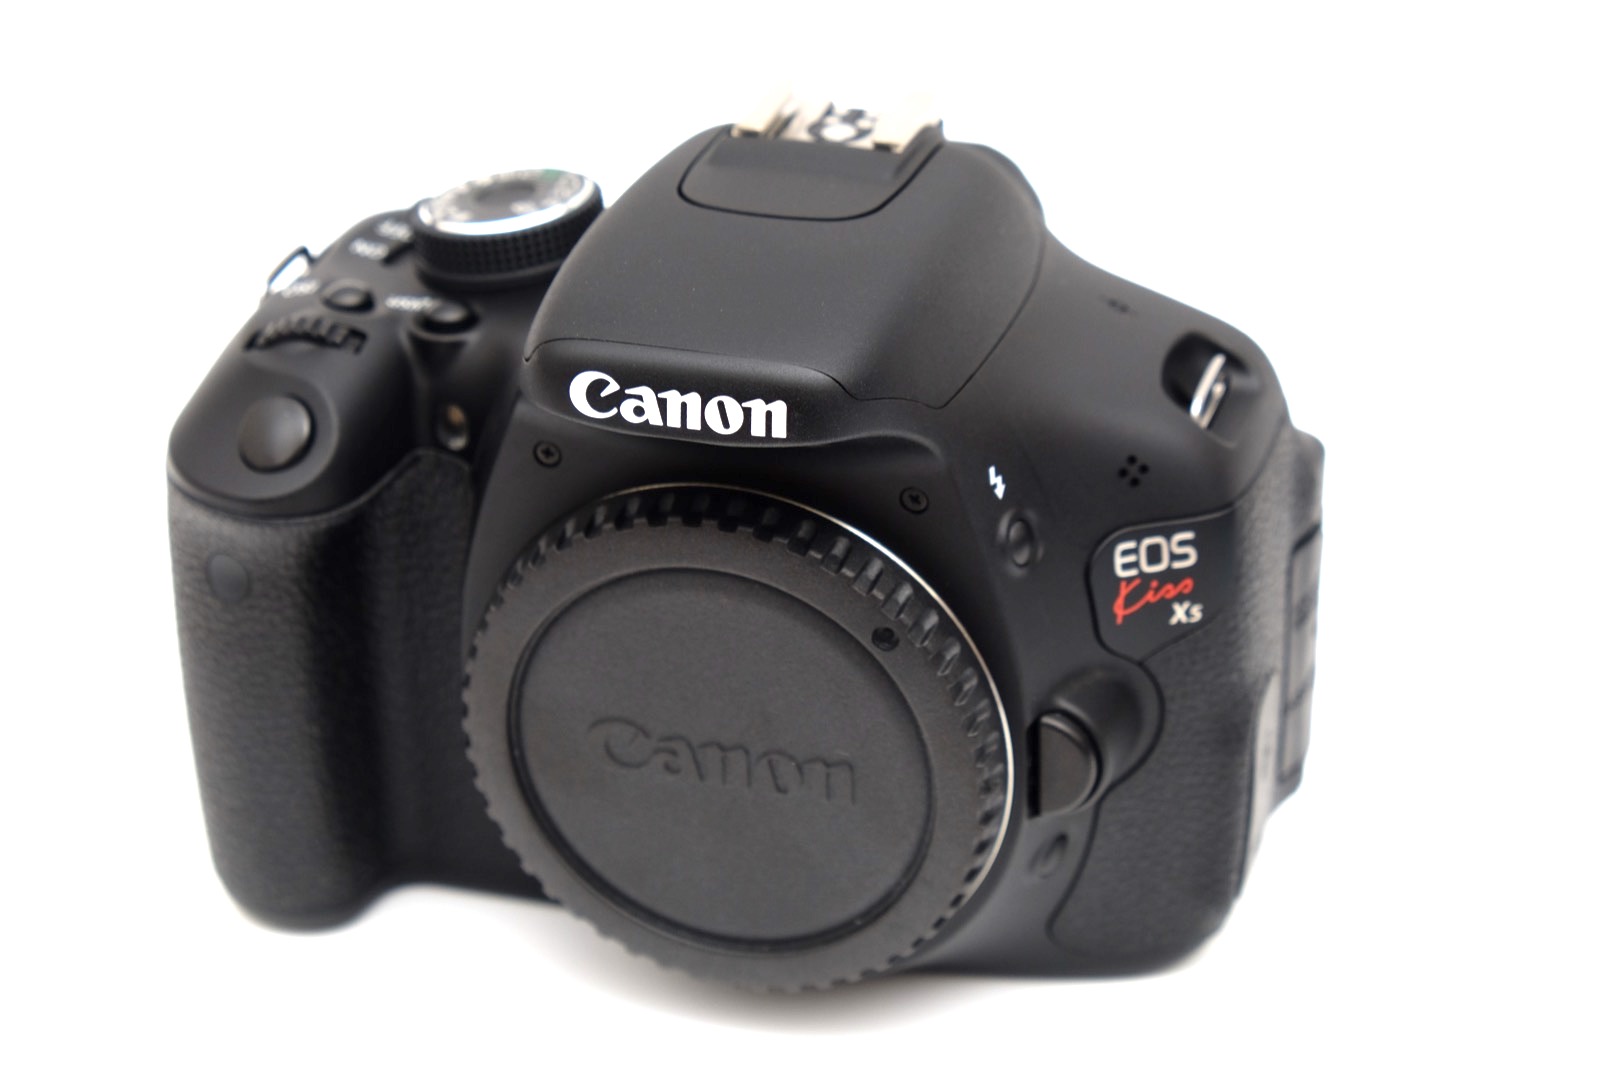 Webカメラ目的で中古の一眼レフデジカメを購入したら新品並みの商品が 